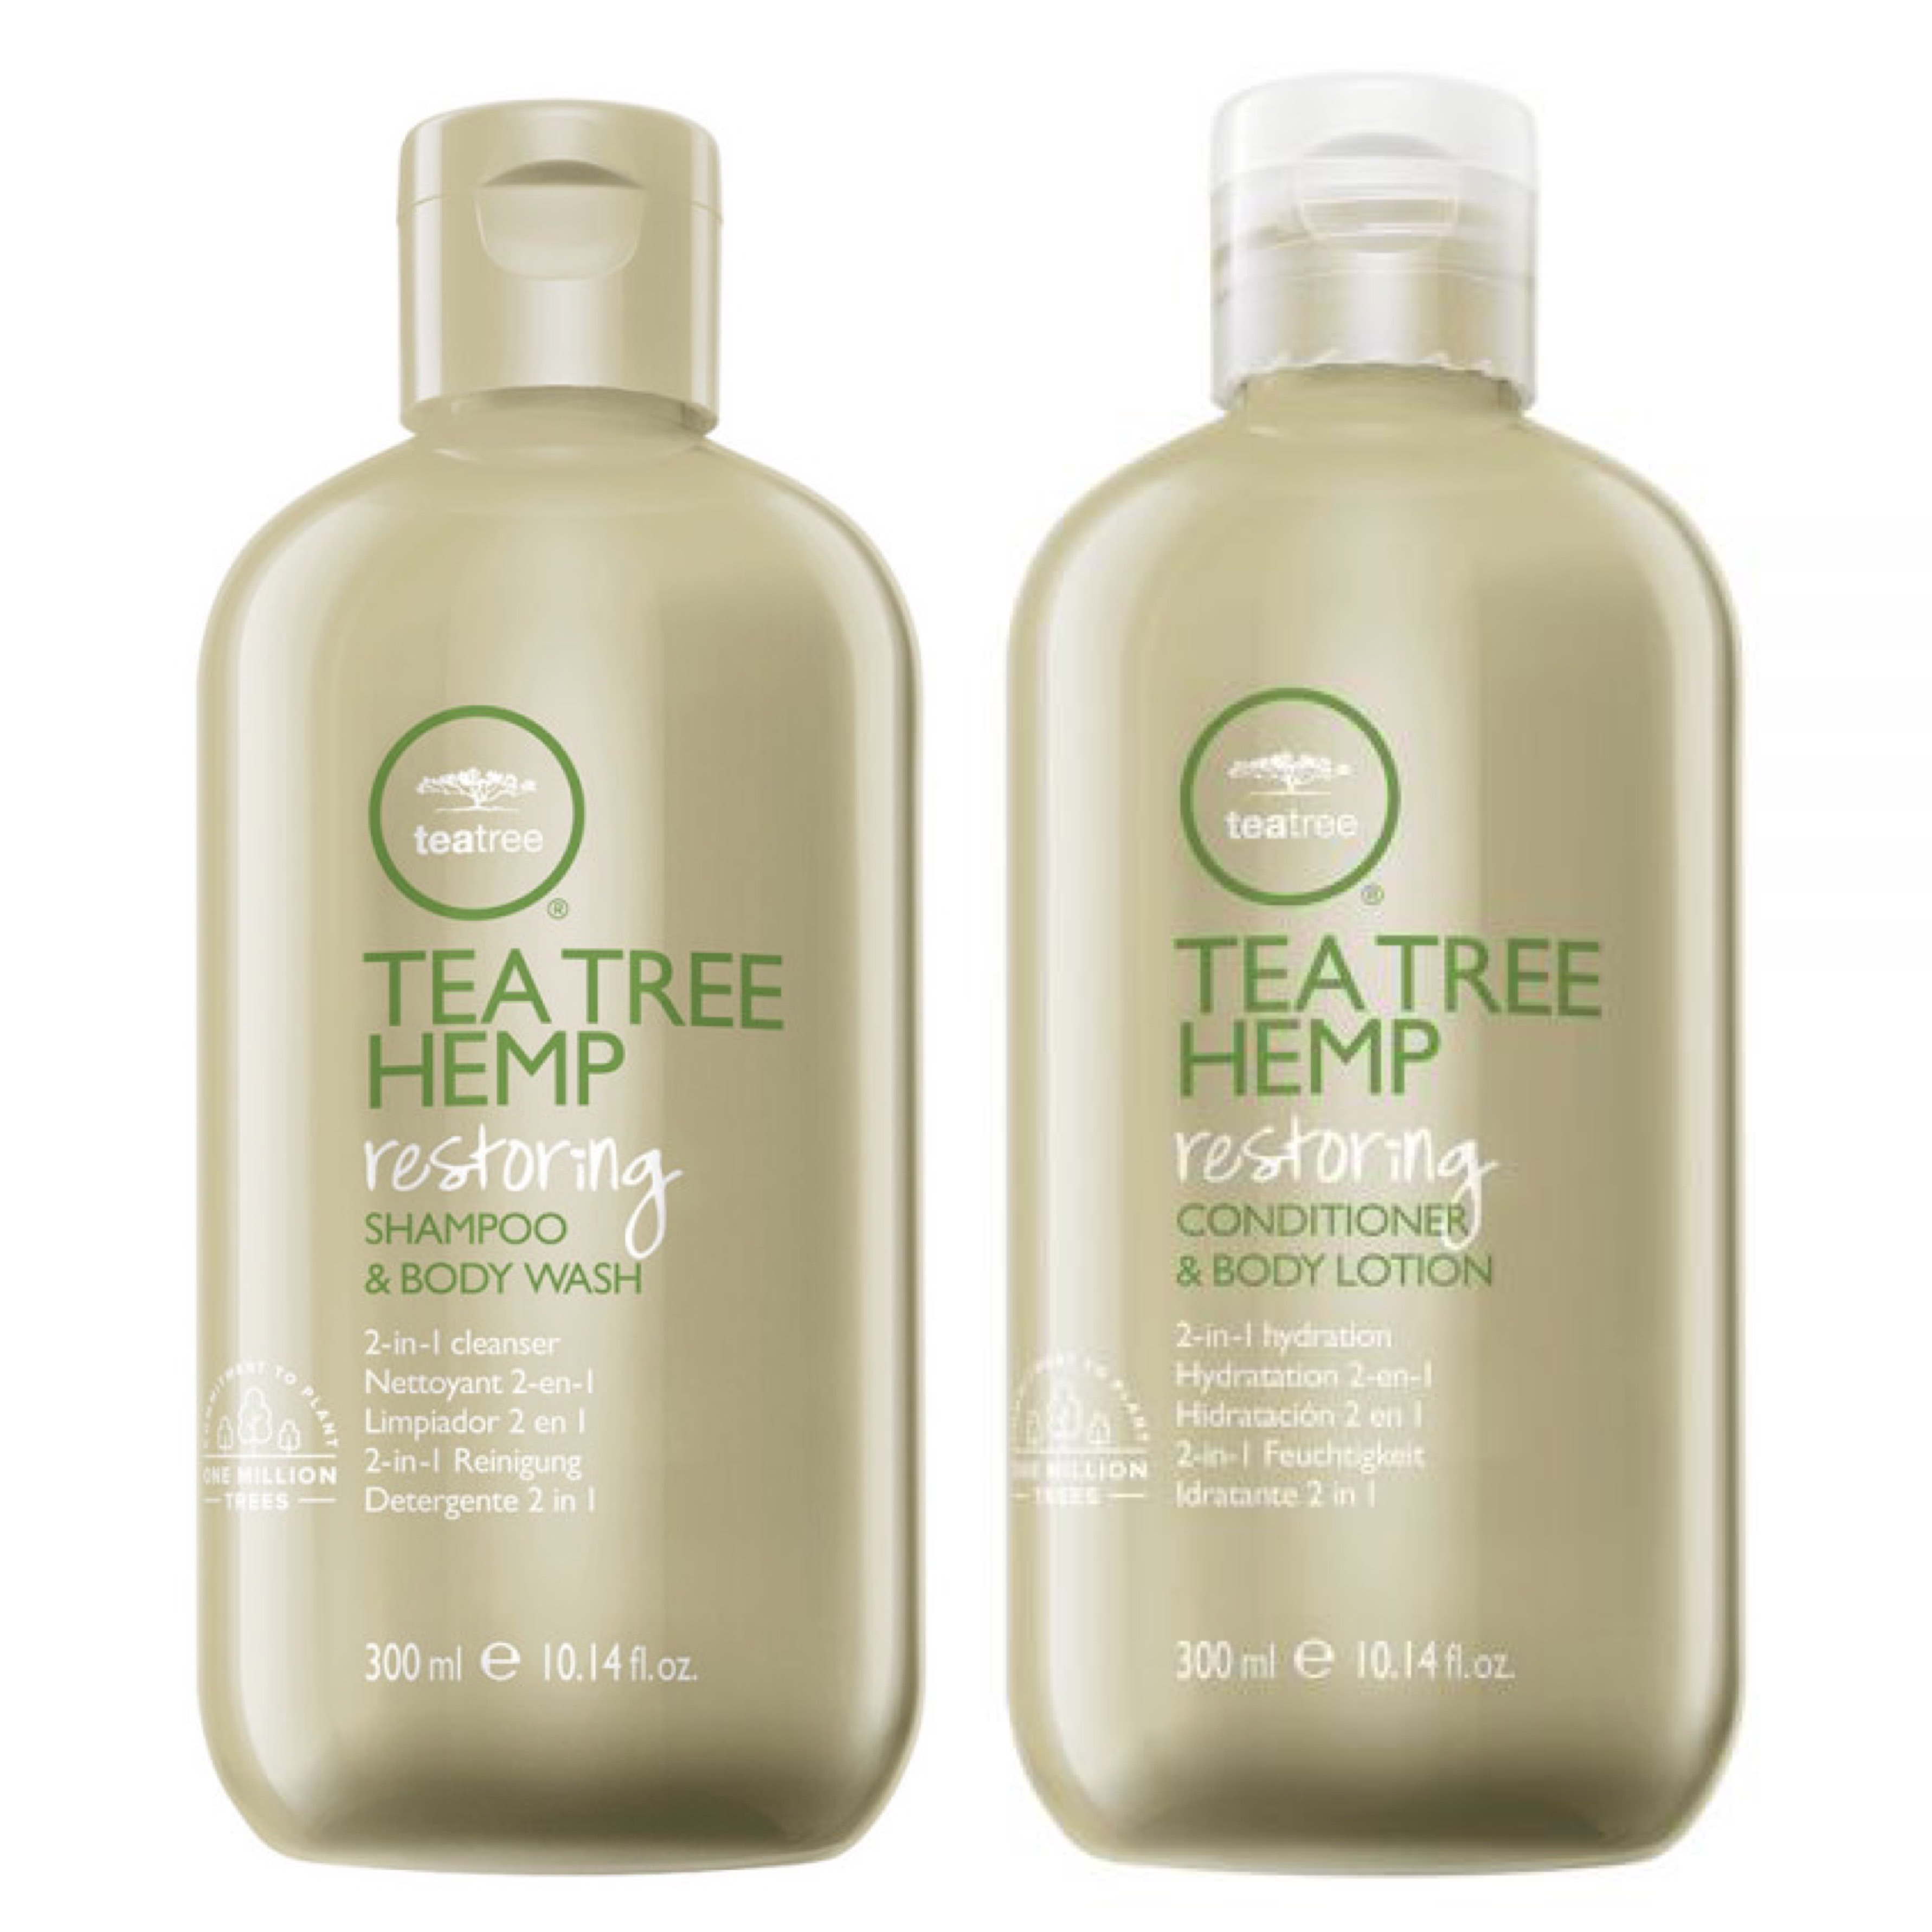 Paul Mitchell Tea Tree Hemp Duo - Restoring Shampoo & Body Wash + Restoring Conditioner & Body Lotion